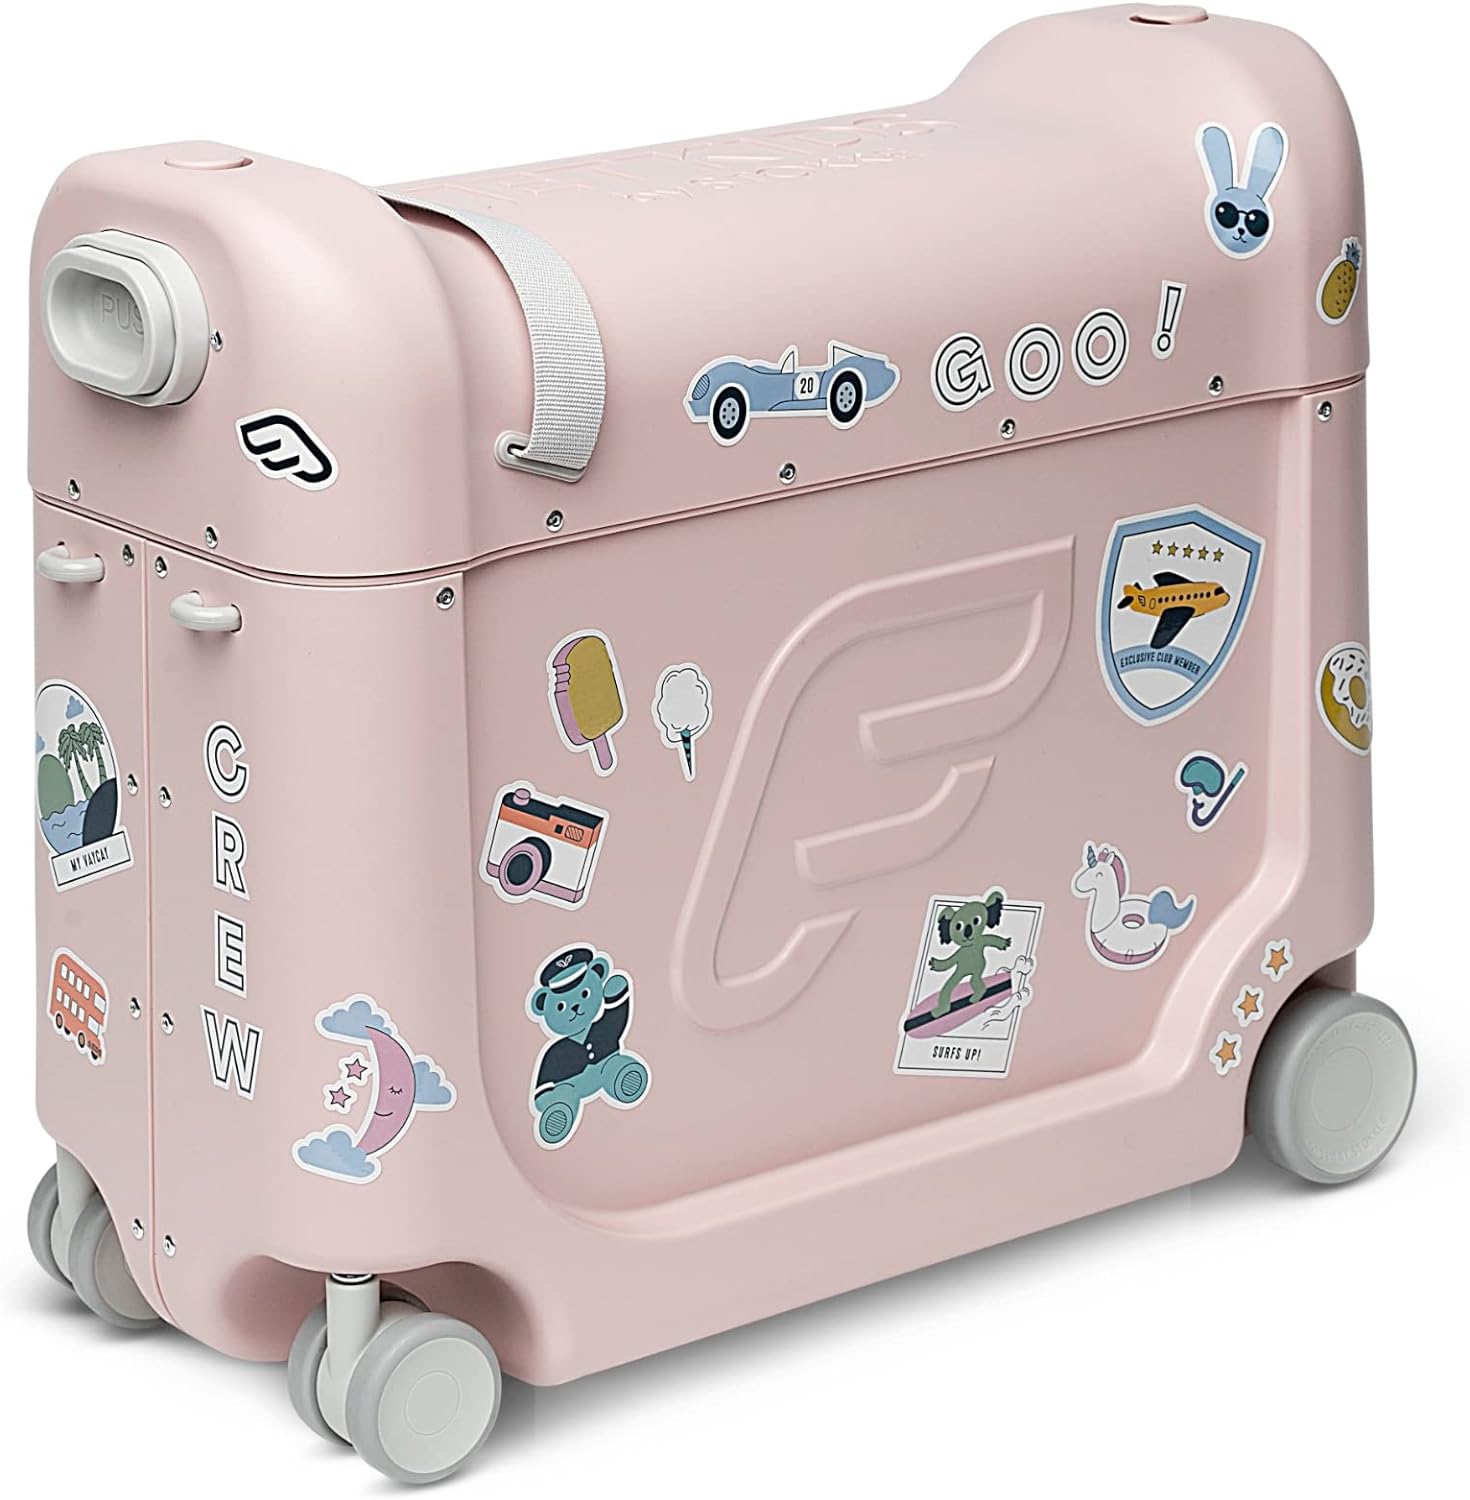 8. The Jet Kids Stokke Kid’s Ride-on Luggage